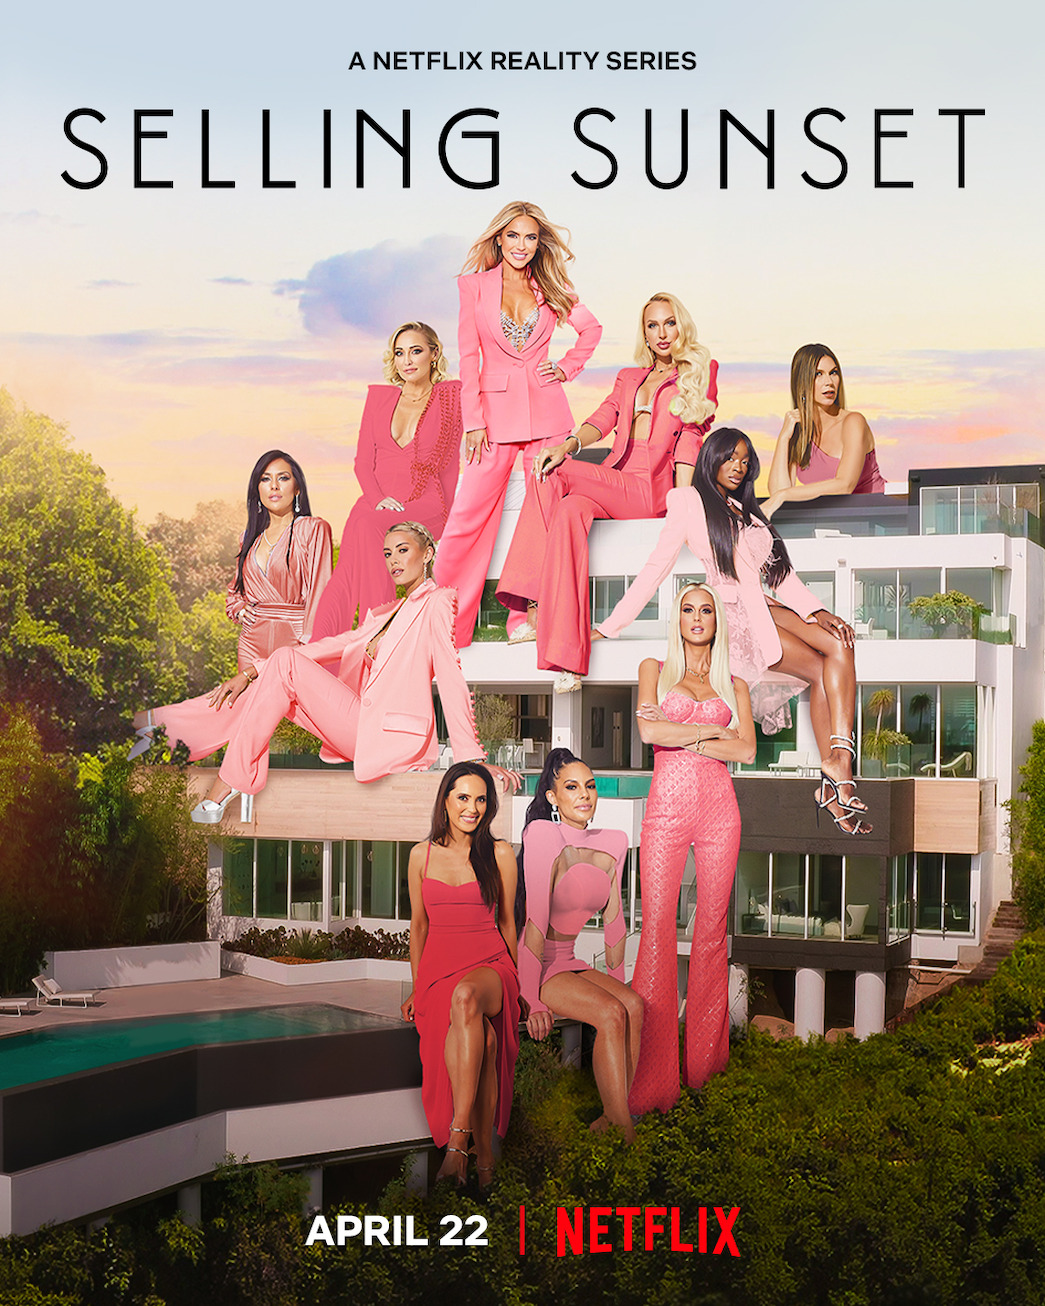 Selling Sunset' Season 5 Release Date Announced - Netflix Tudum